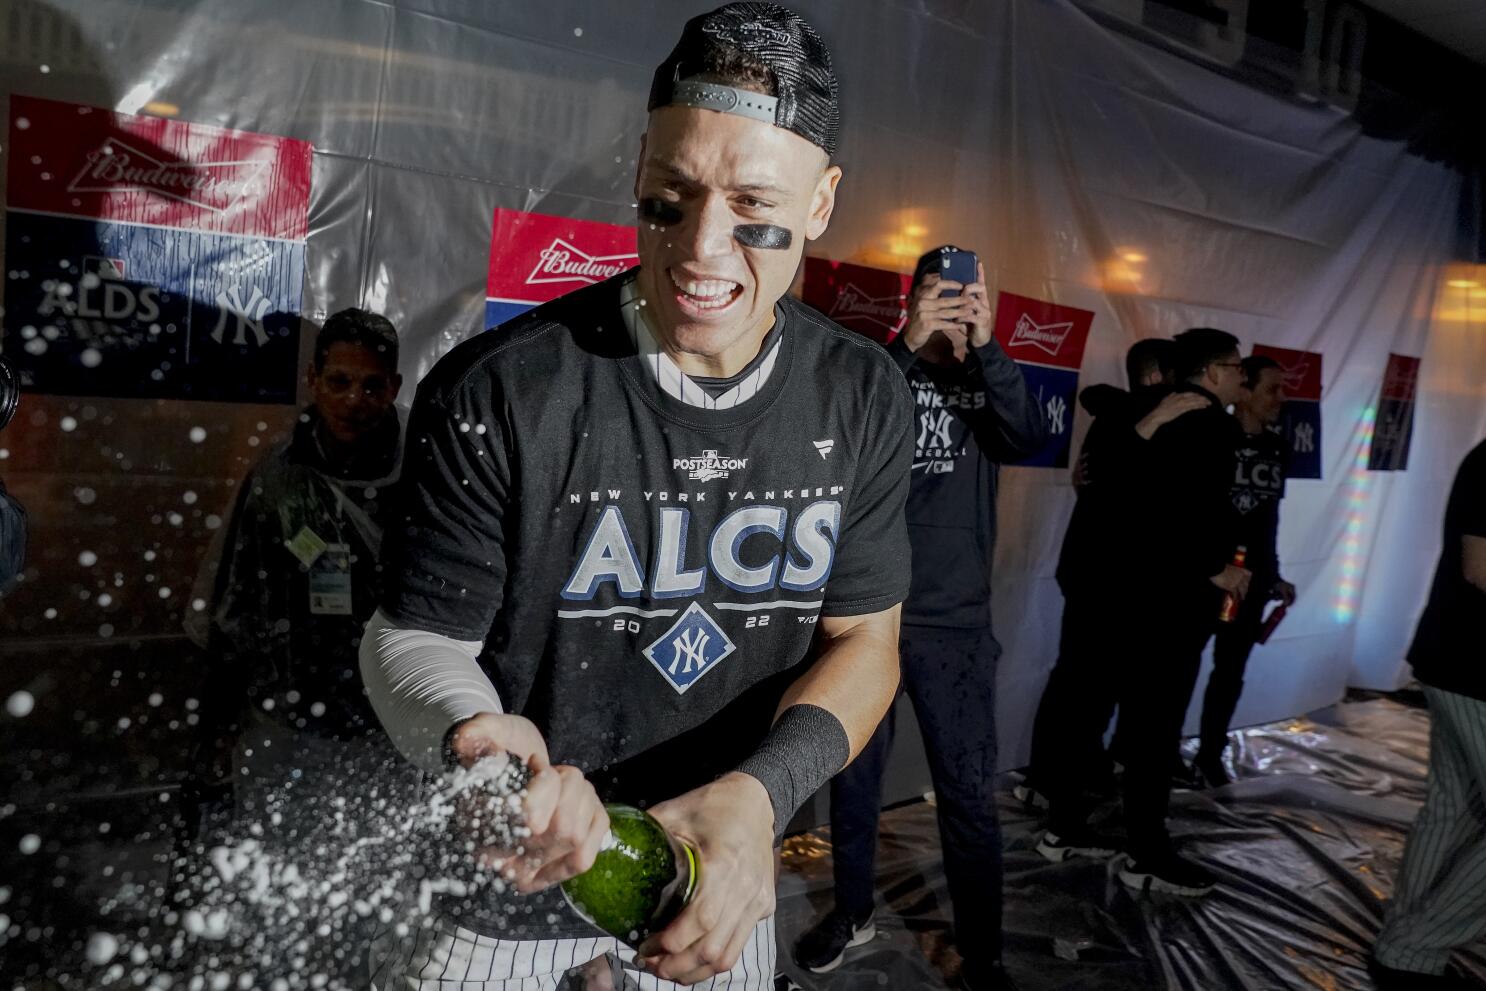 Stanton, Judge HR, Yankees beat Guards, into ALCS vs Astros - The San Diego  Union-Tribune